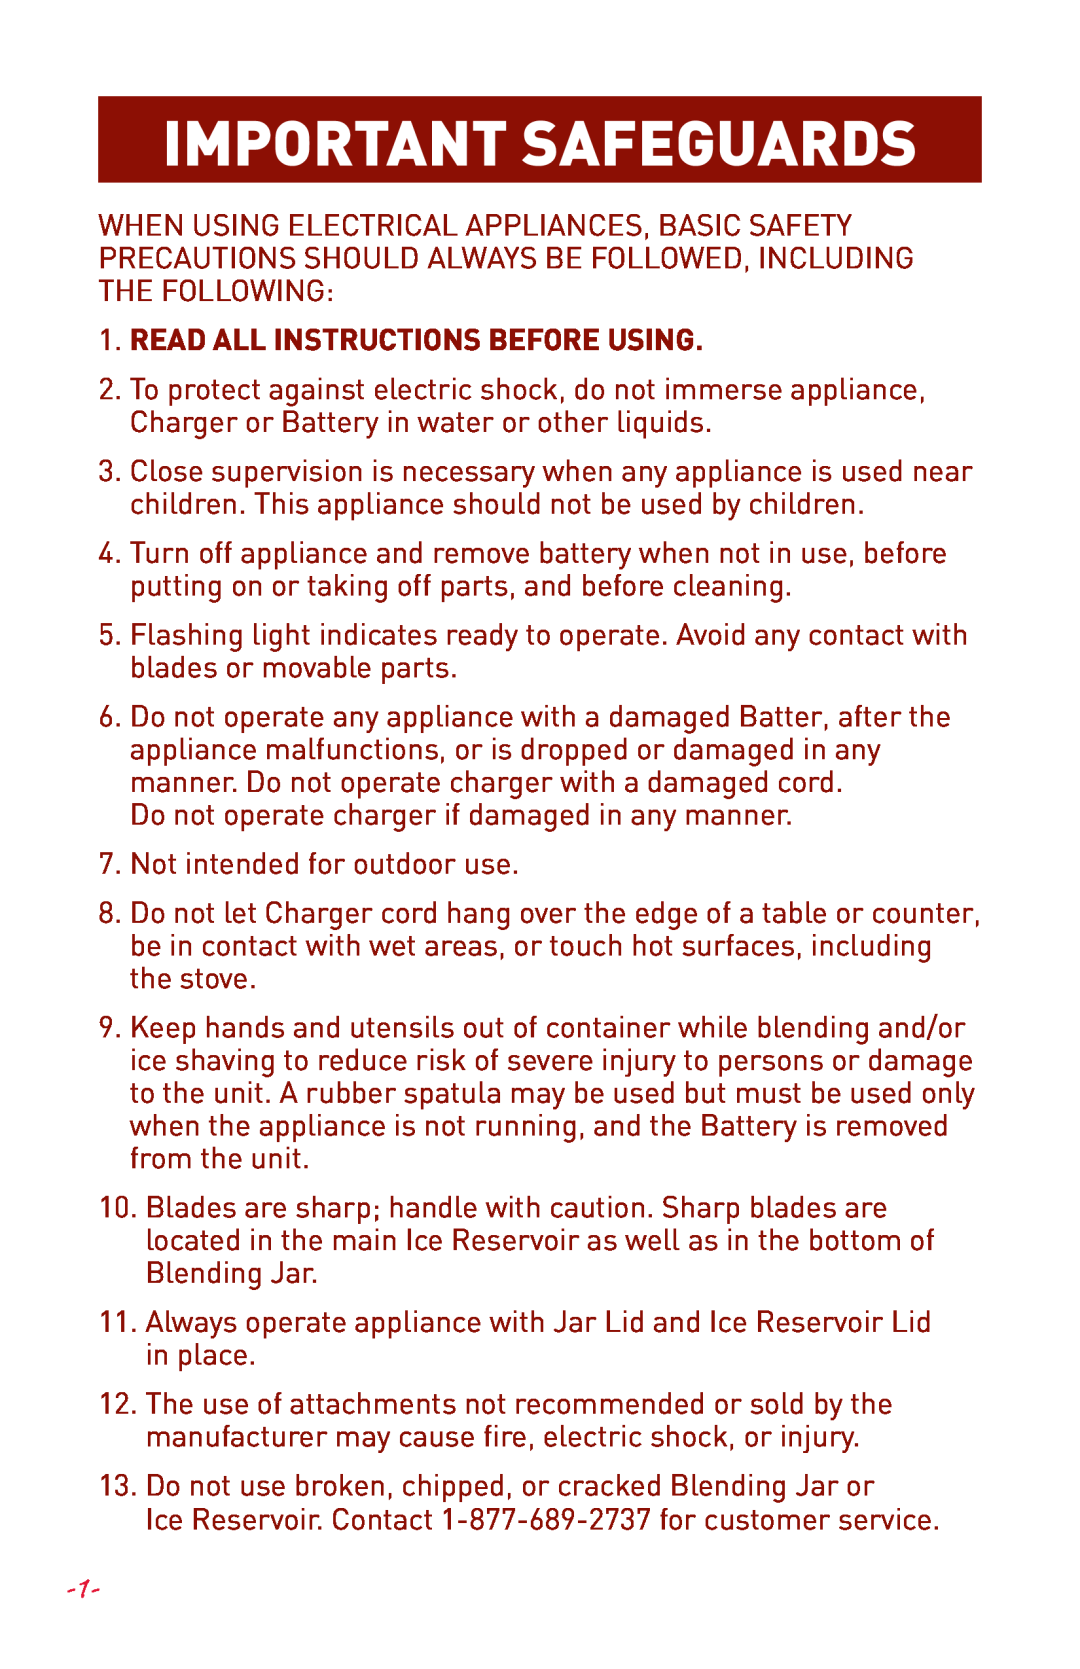 Margaritaville NBMGDM0900 user manual Read All Instructions Before Using, Important Safeguards 